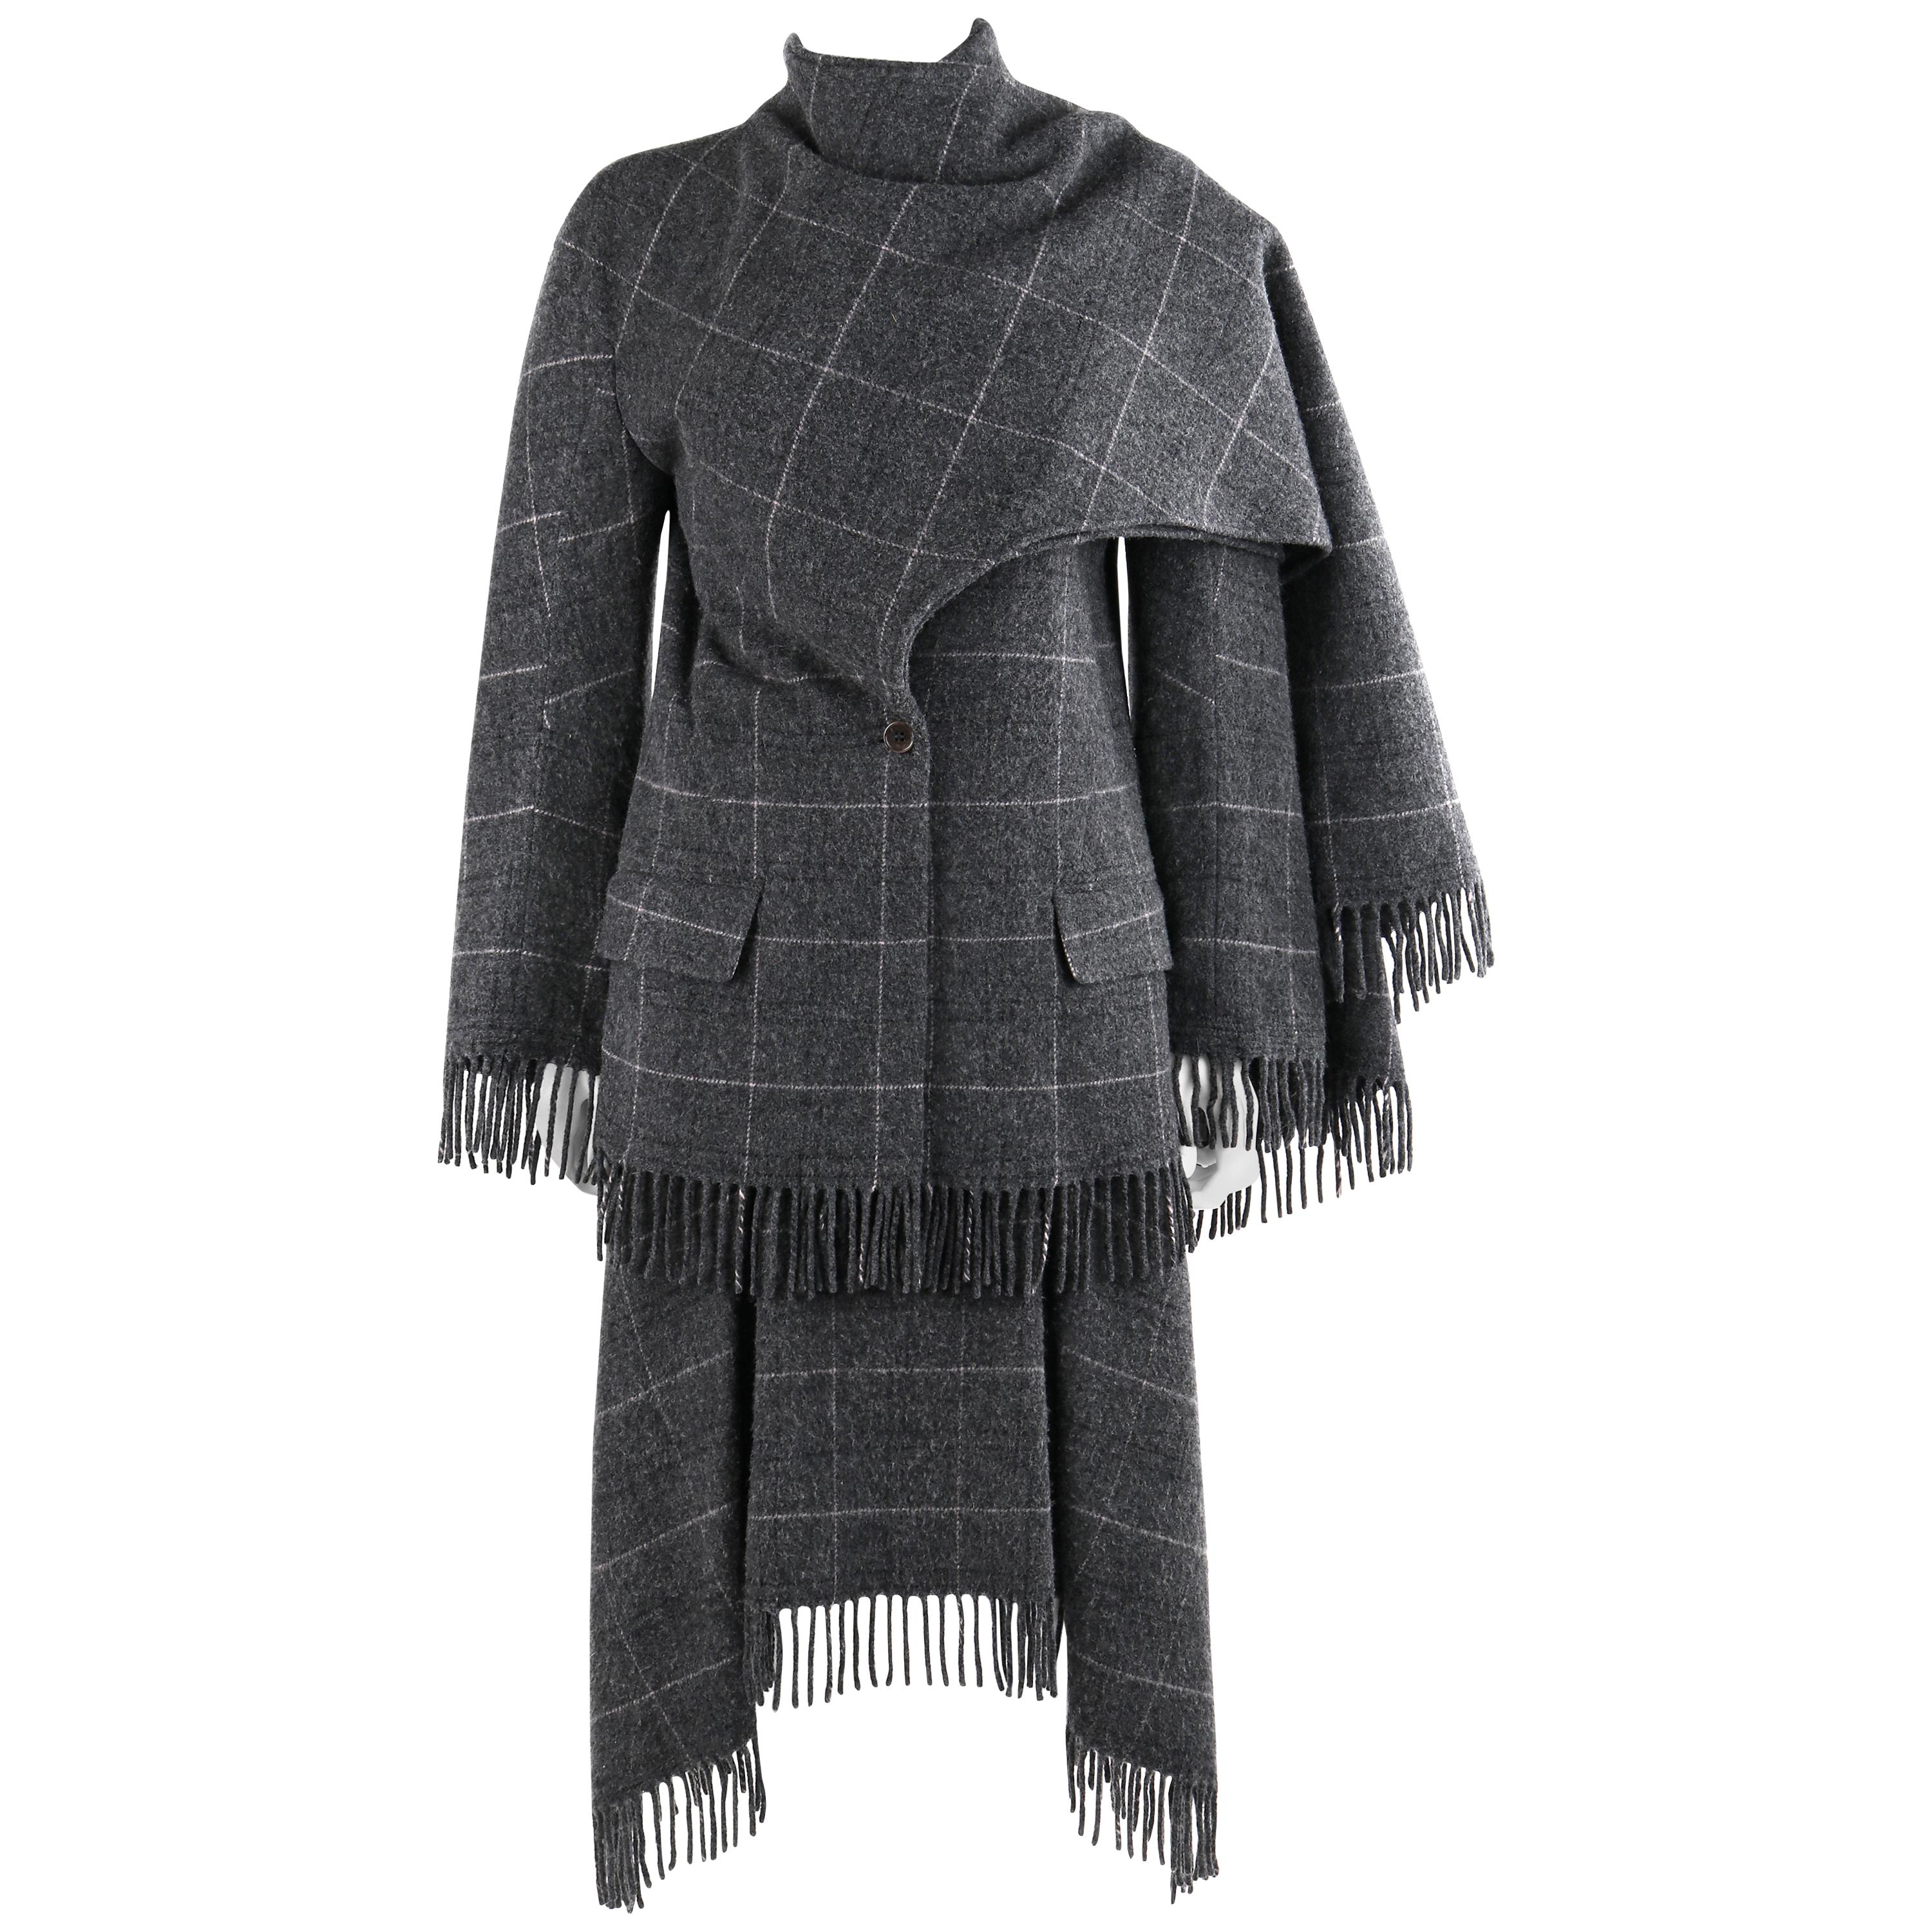 ALEXANDER McQUEEN A/W 1999 “The Overlook” Gray Check Fringe Jacket Skirt Set